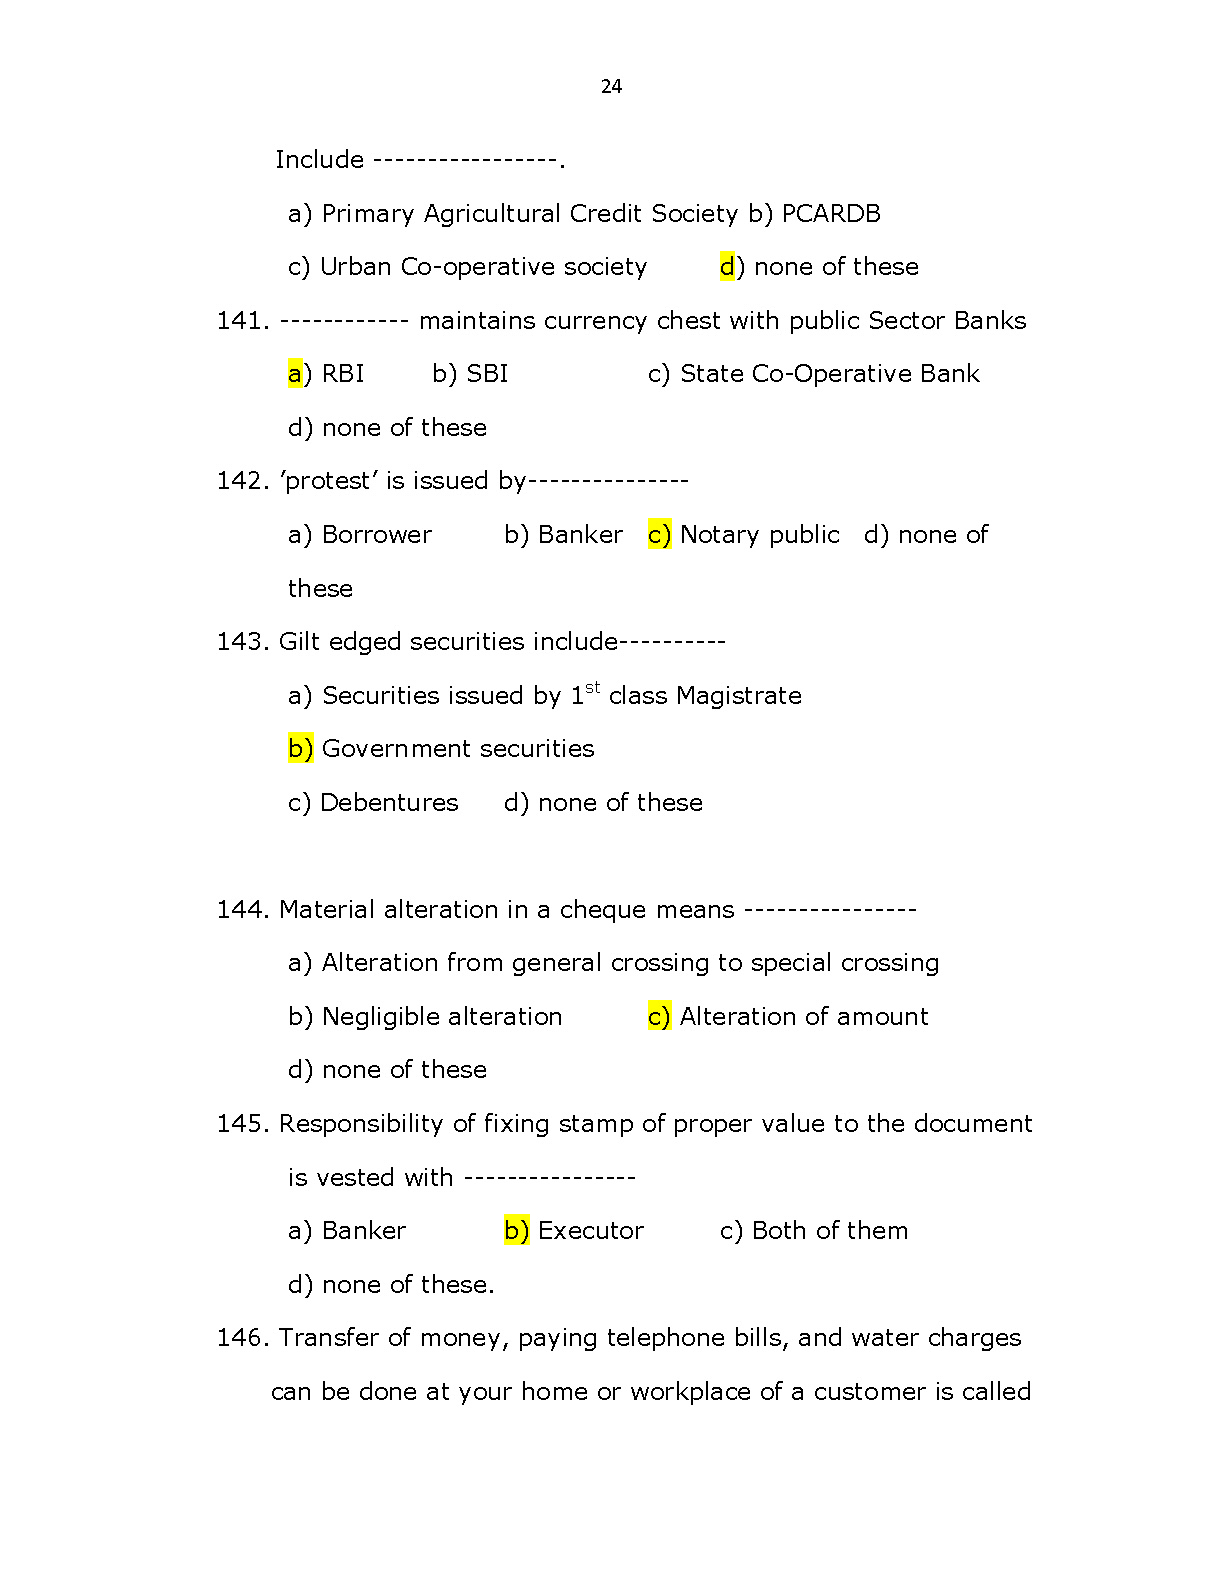 Kerala Co operative bank recruitment Sample Question Paper - Notification Image 24